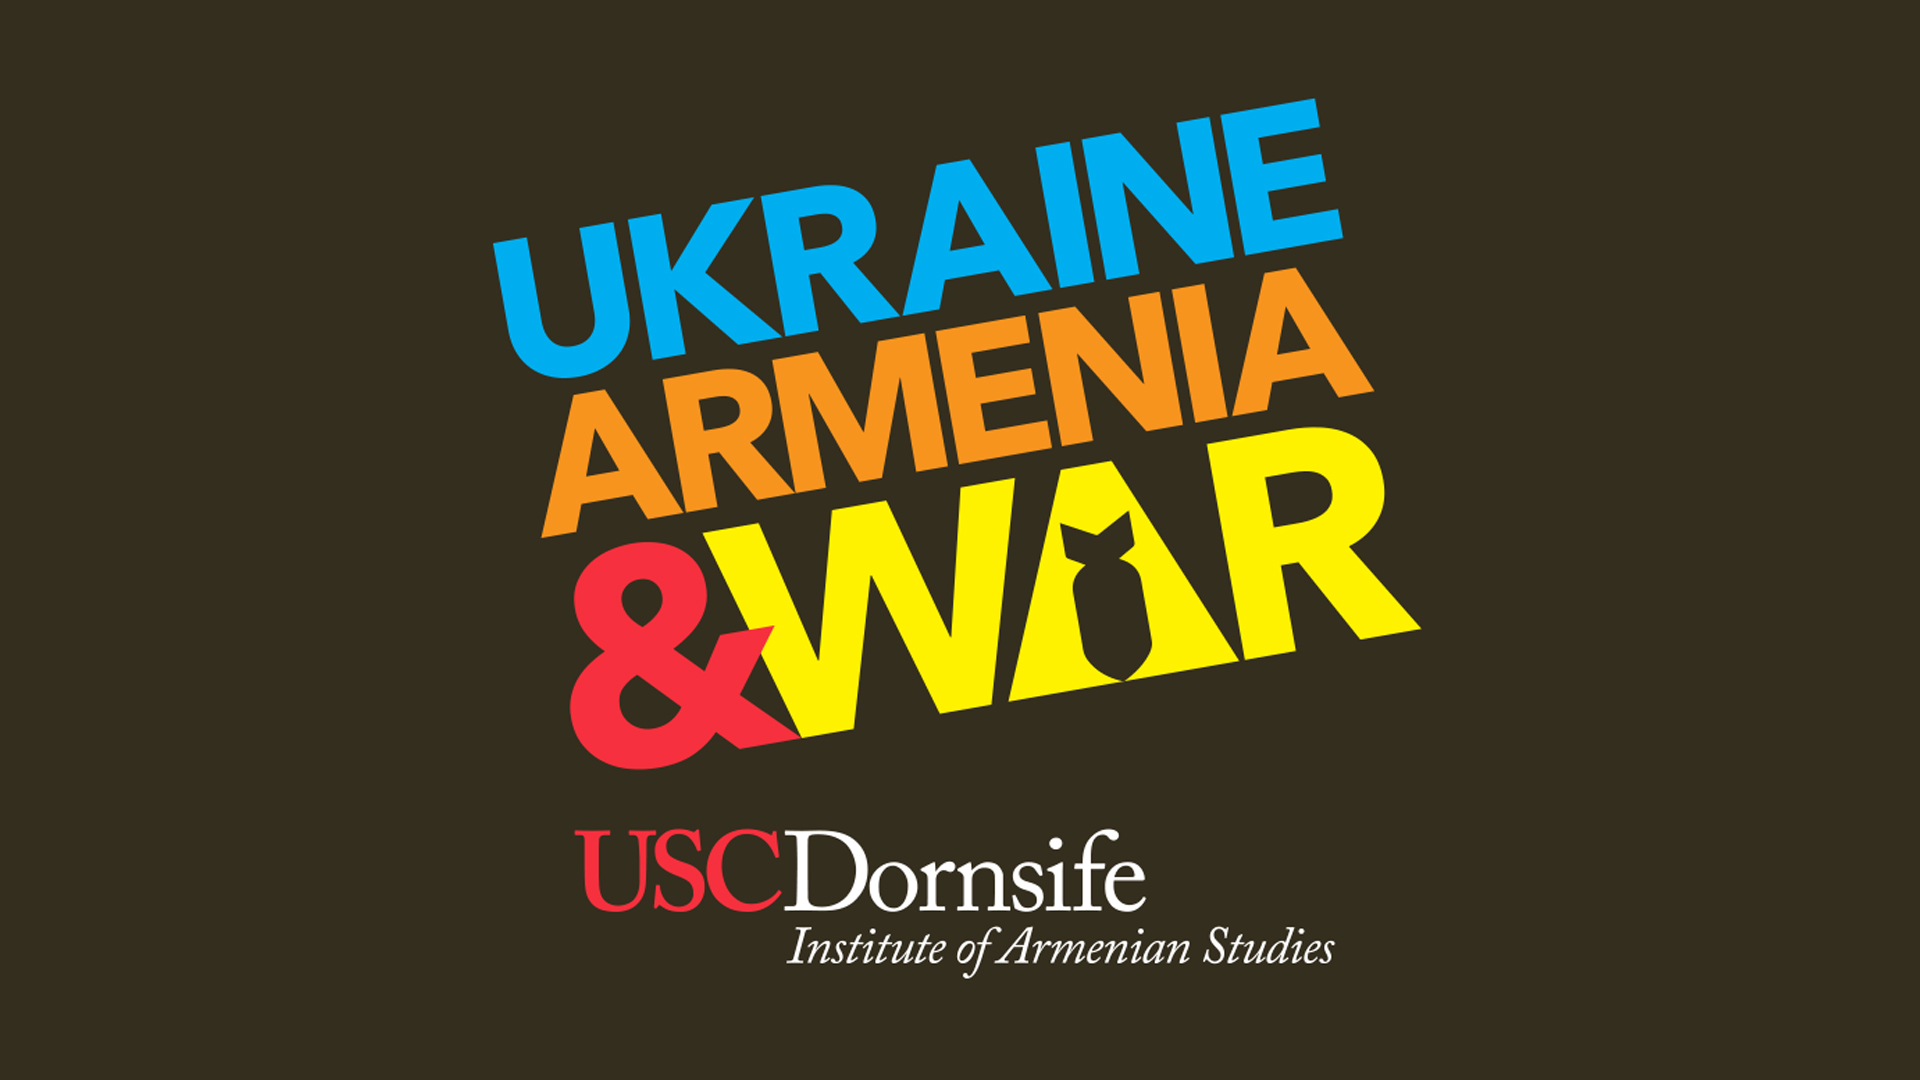 Armenia’s Ambassador to Kyiv on Ukraine, Armenia & War